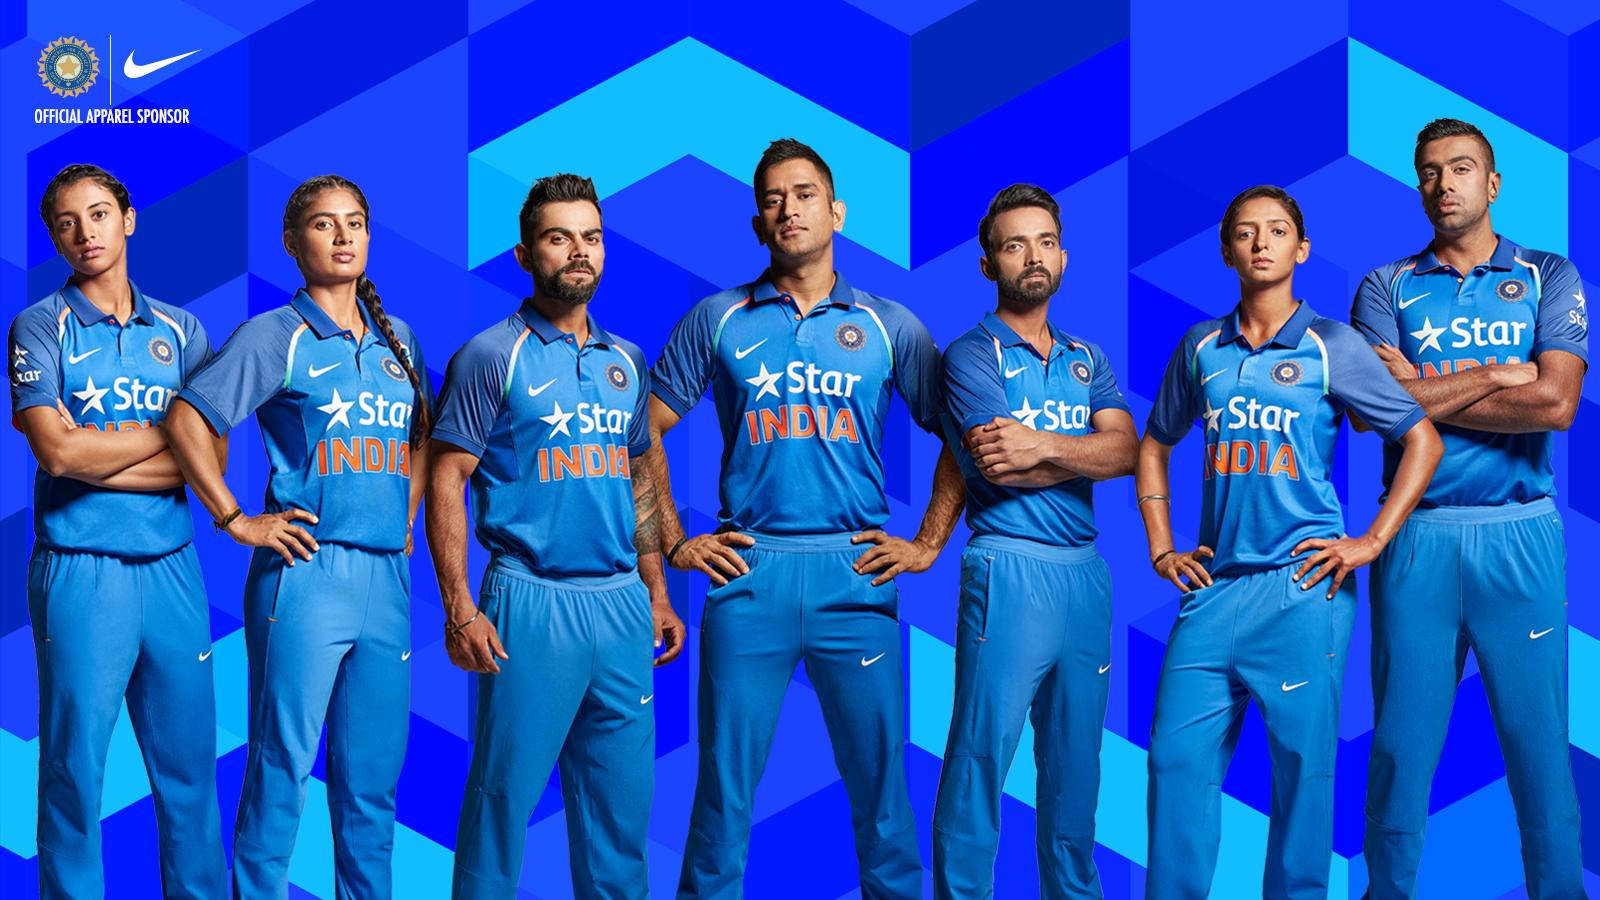 Indian Cricket Team Sponsor Promo Wallpaper